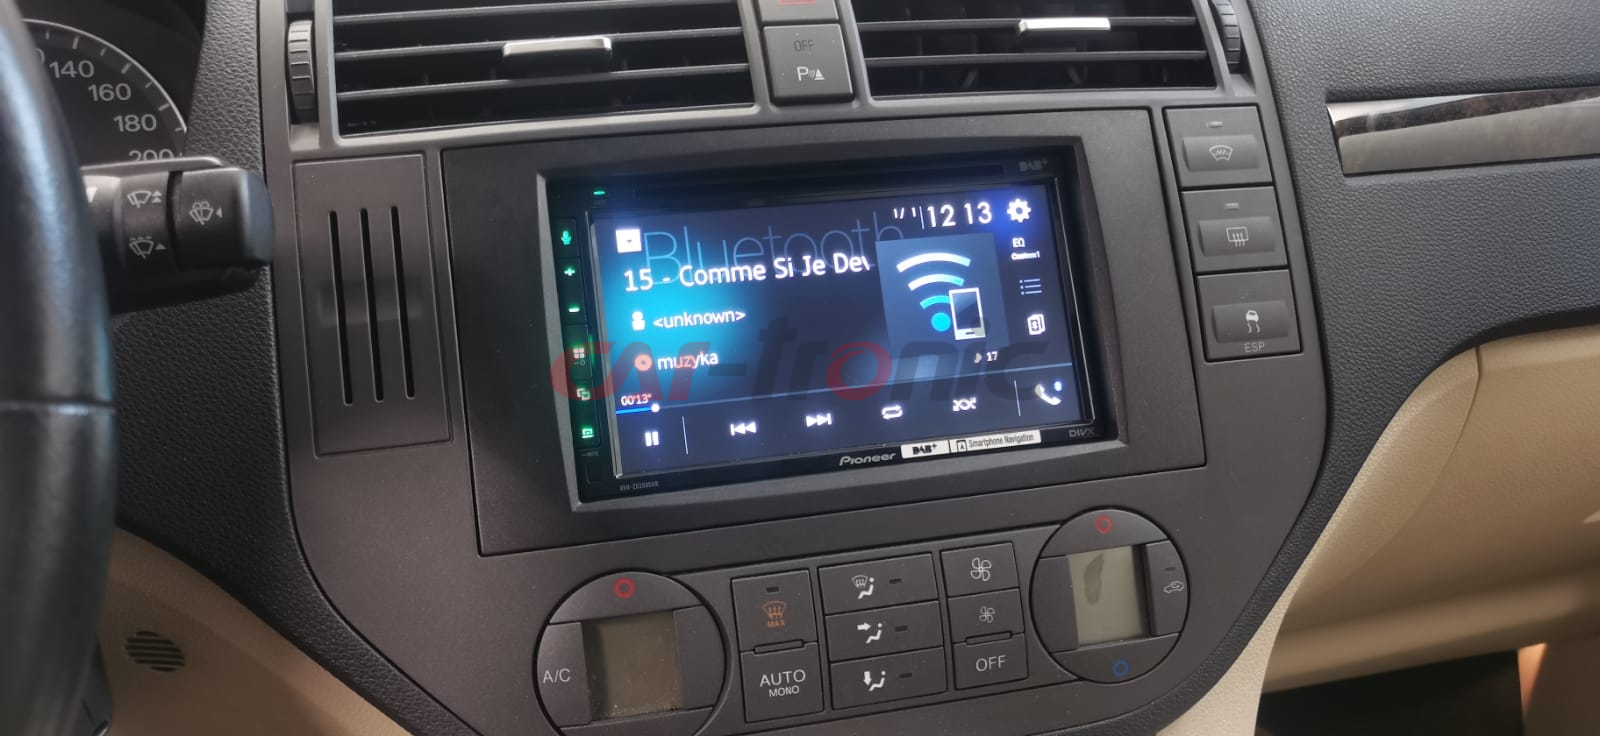 Stacja multimedialna Pioneer AVH-Z5200DAB. Apple CarPlay i Android Auto